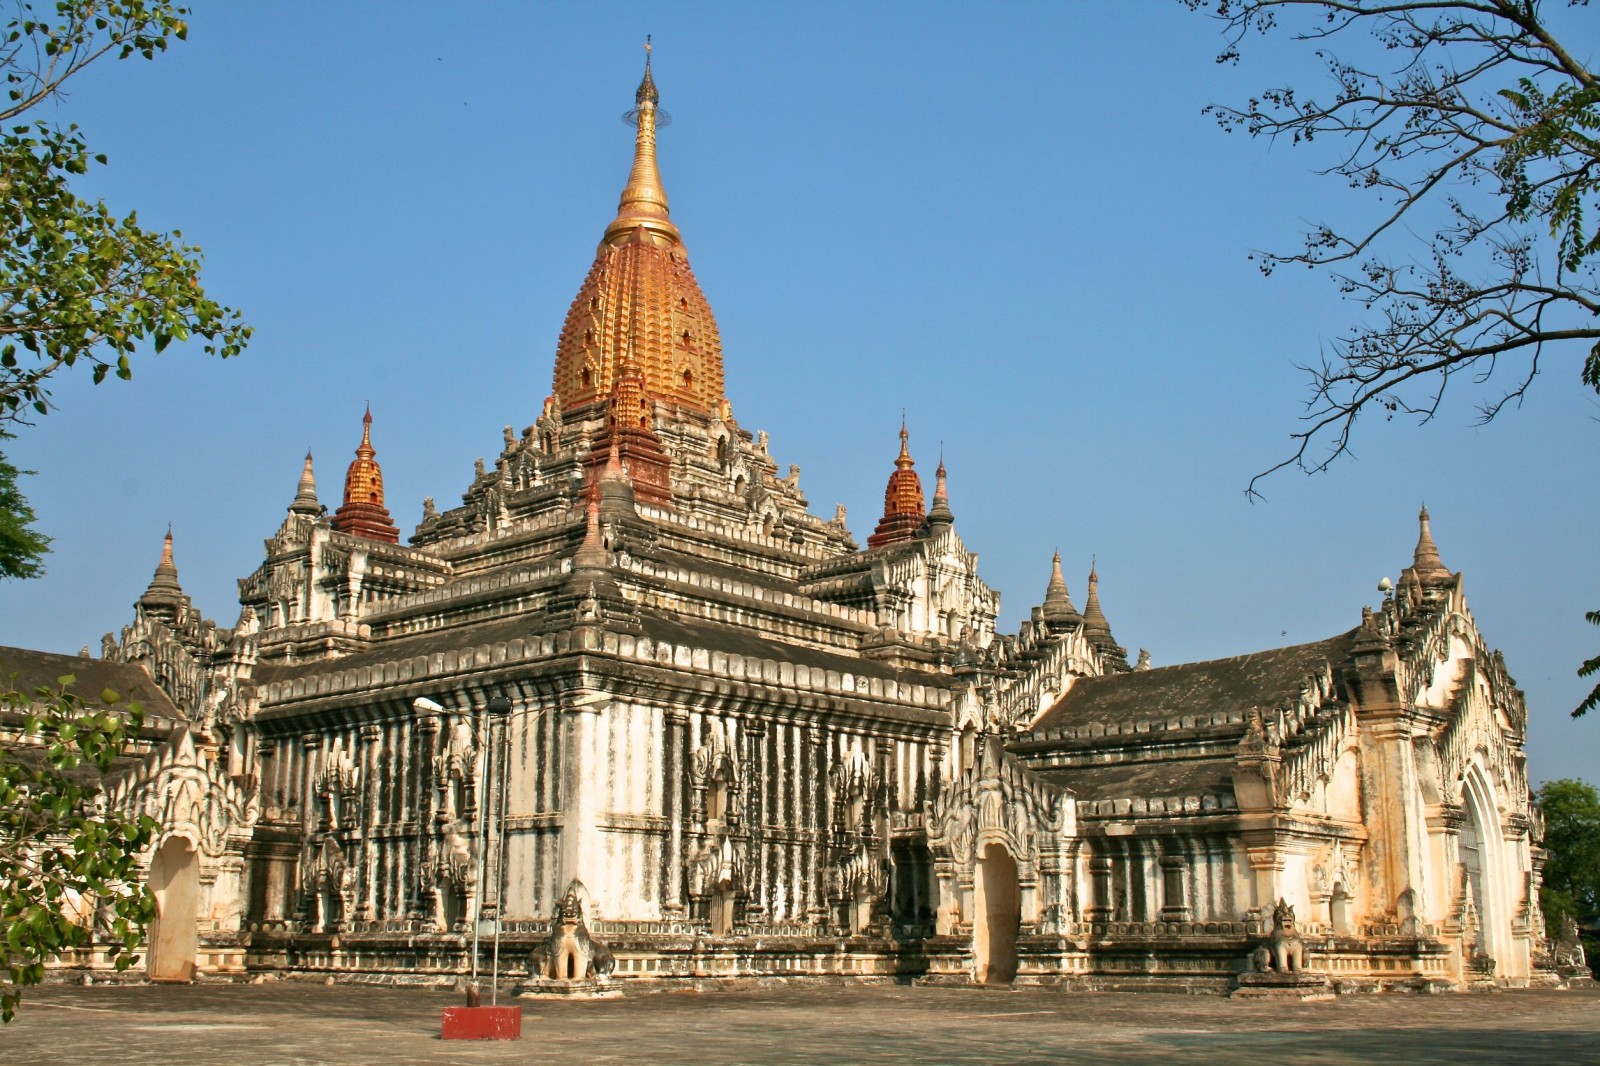 Hidden Architecture » Ananda Temple - Hidden Architecture